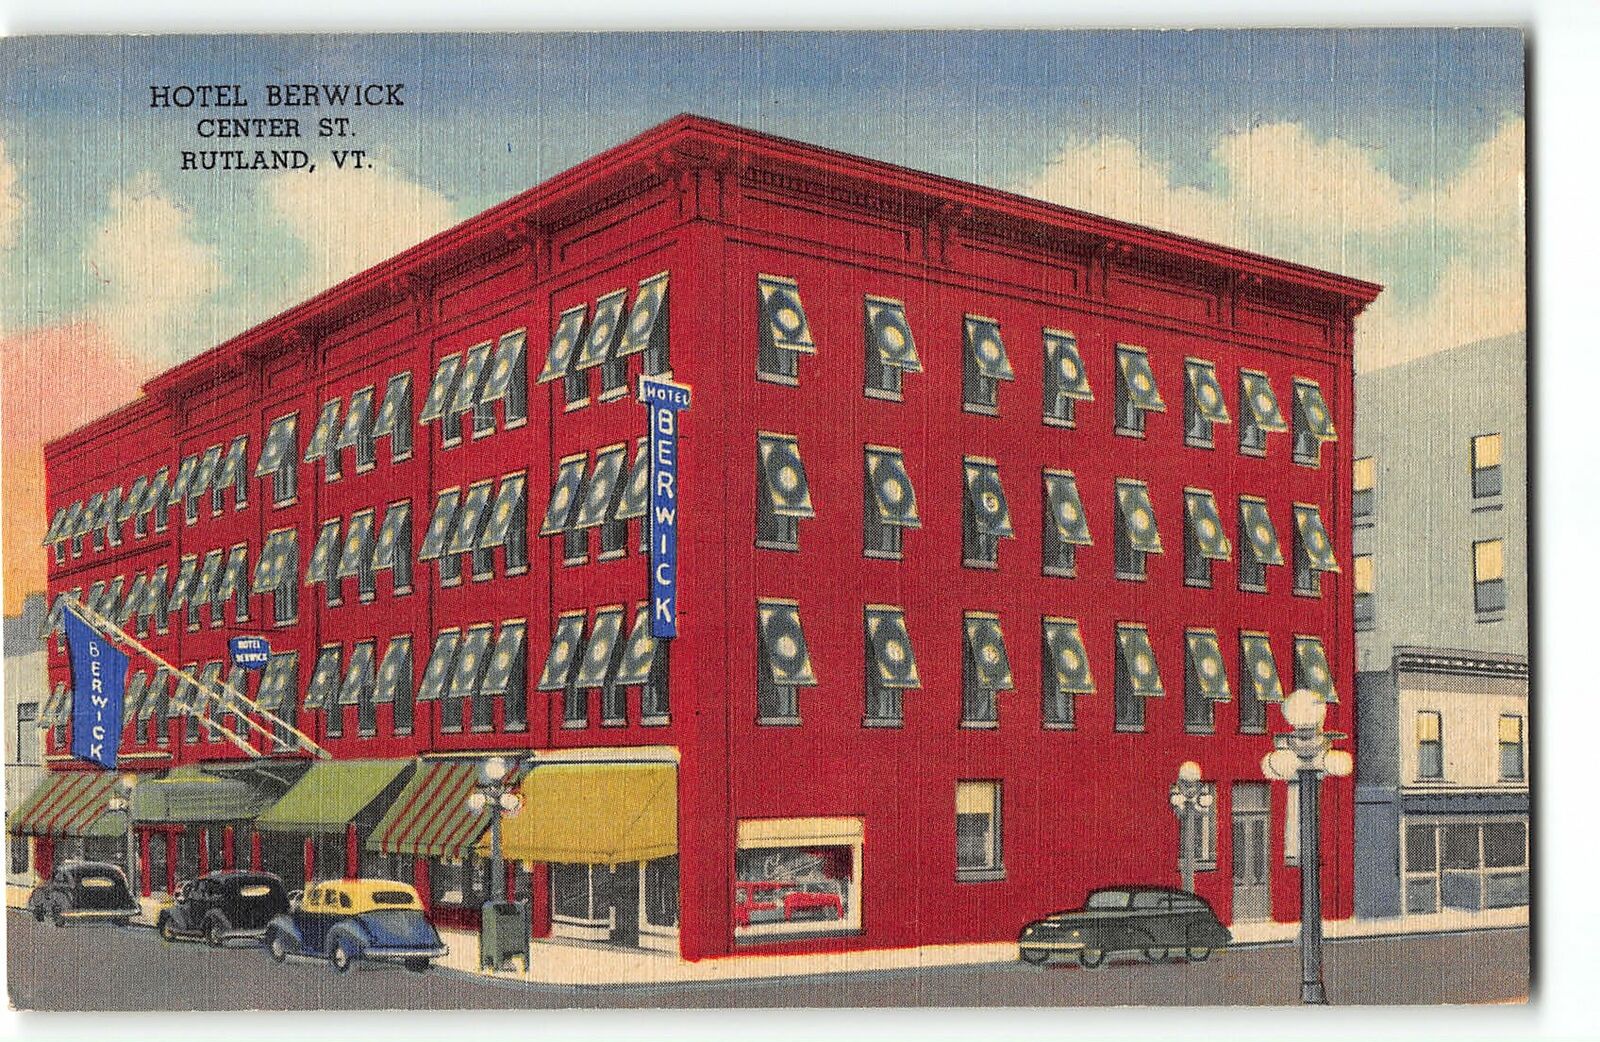 Rutland, Vermont - HOTEL BERWICK, CENTER STREET - 1949 Teich Postcard